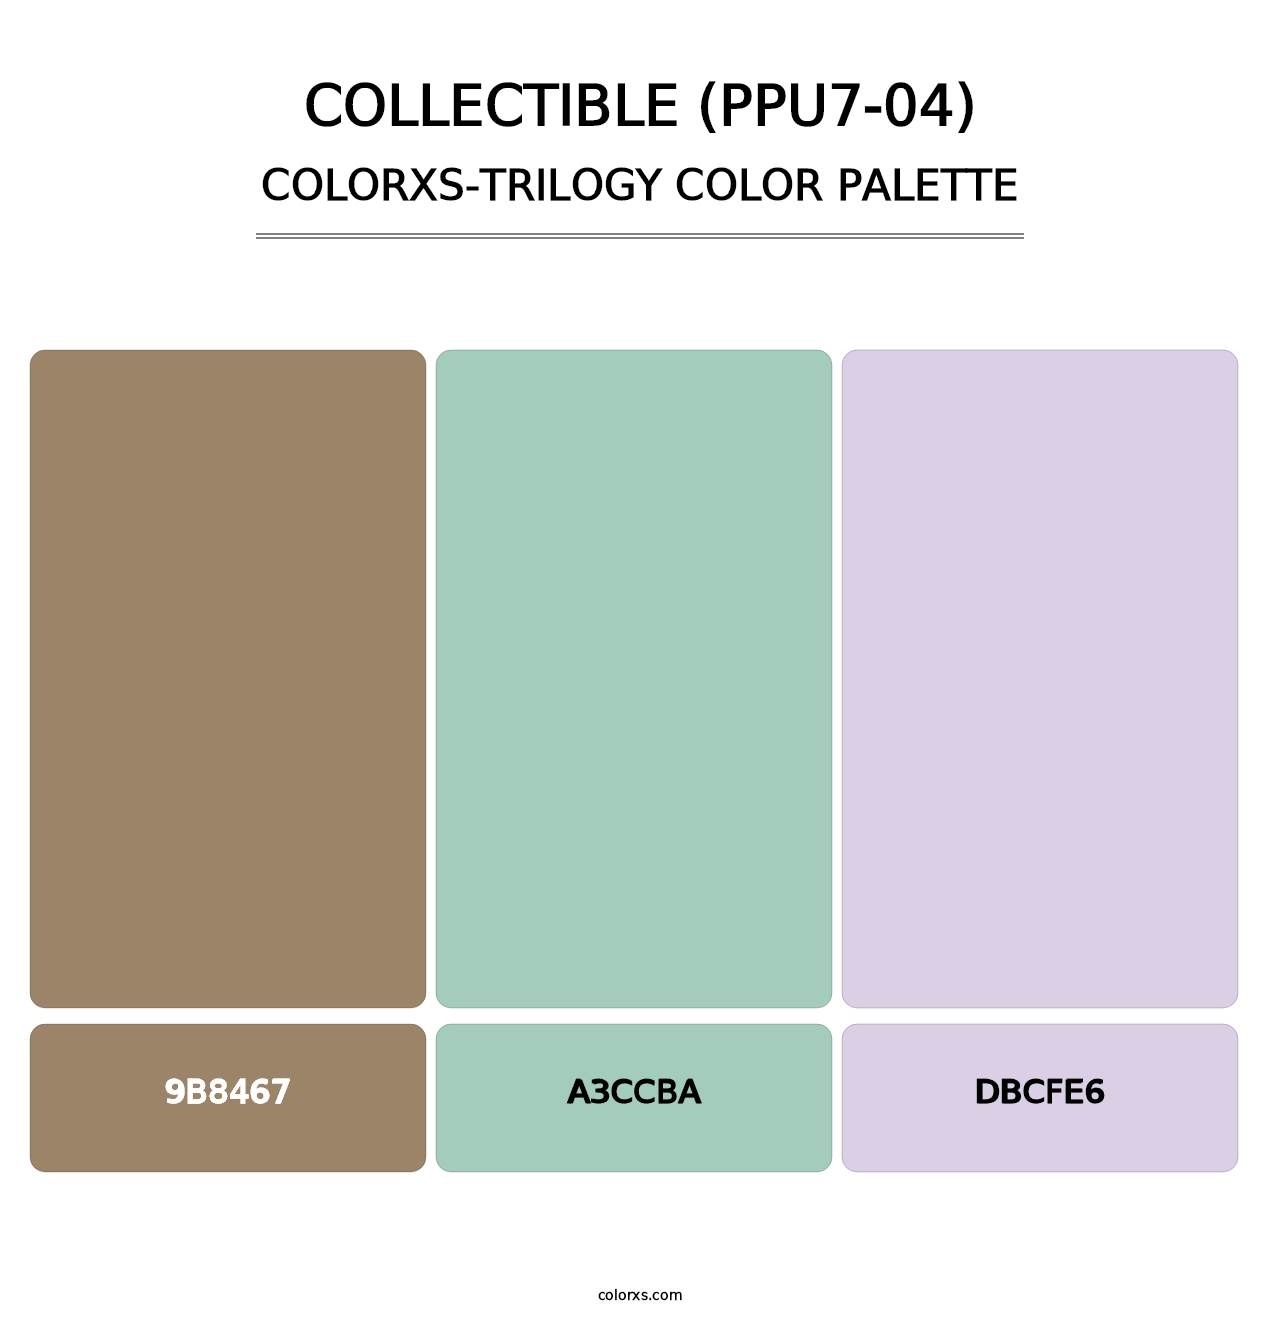 Collectible (PPU7-04) - Colorxs Trilogy Palette